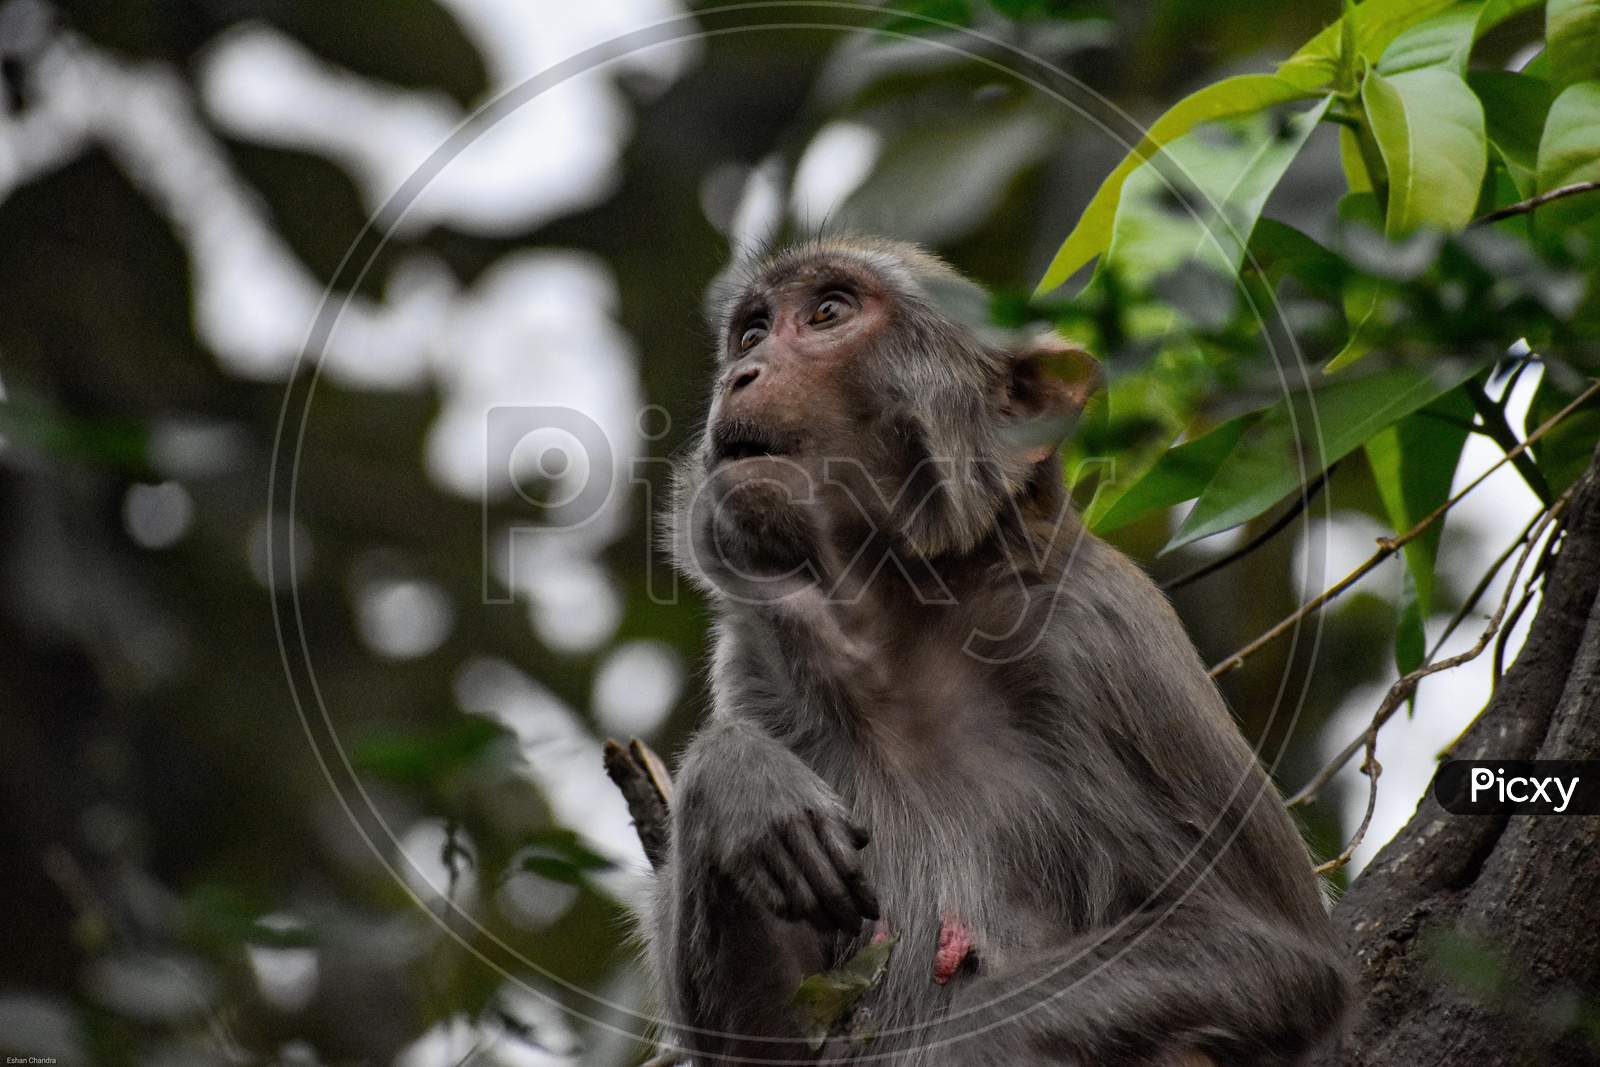 Surprised macaque